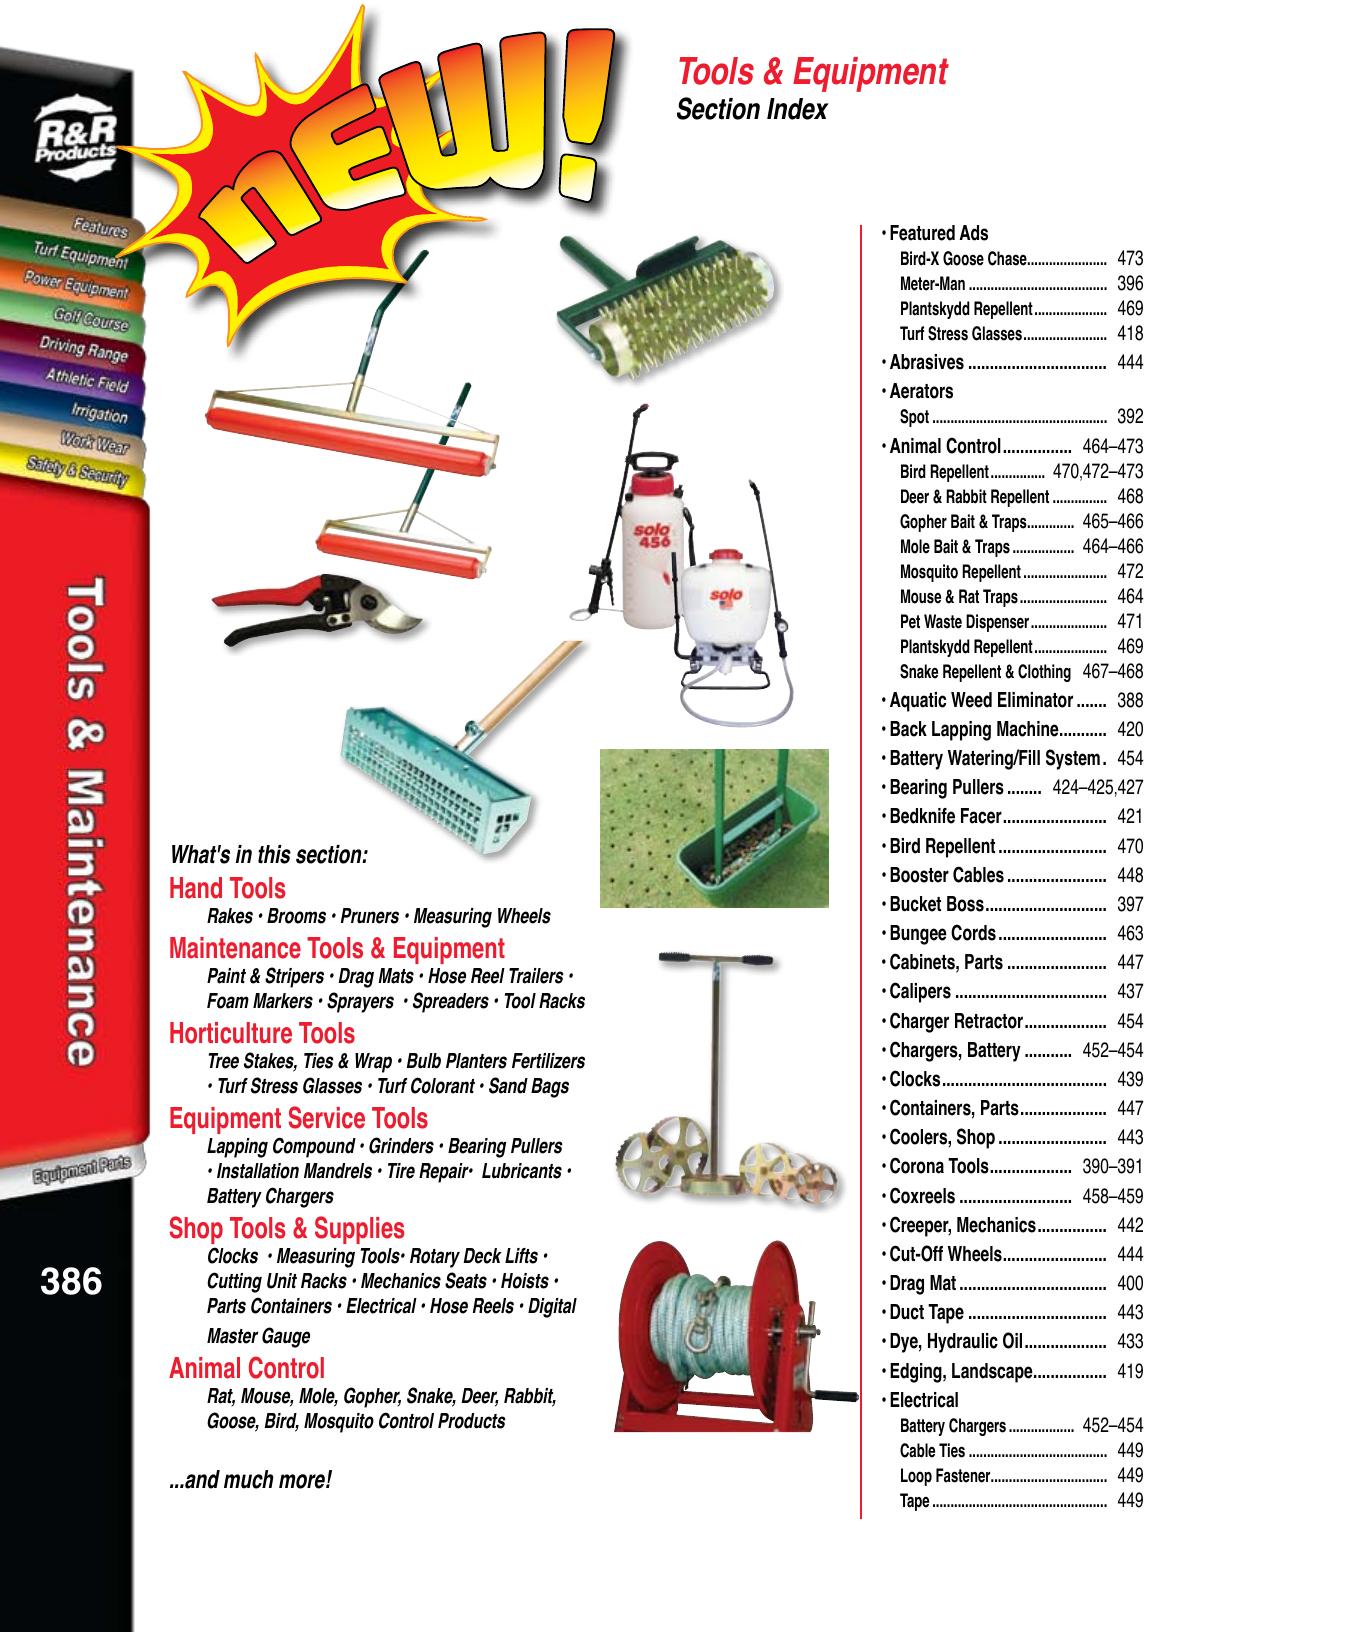 386 Tools & Equipment 2015